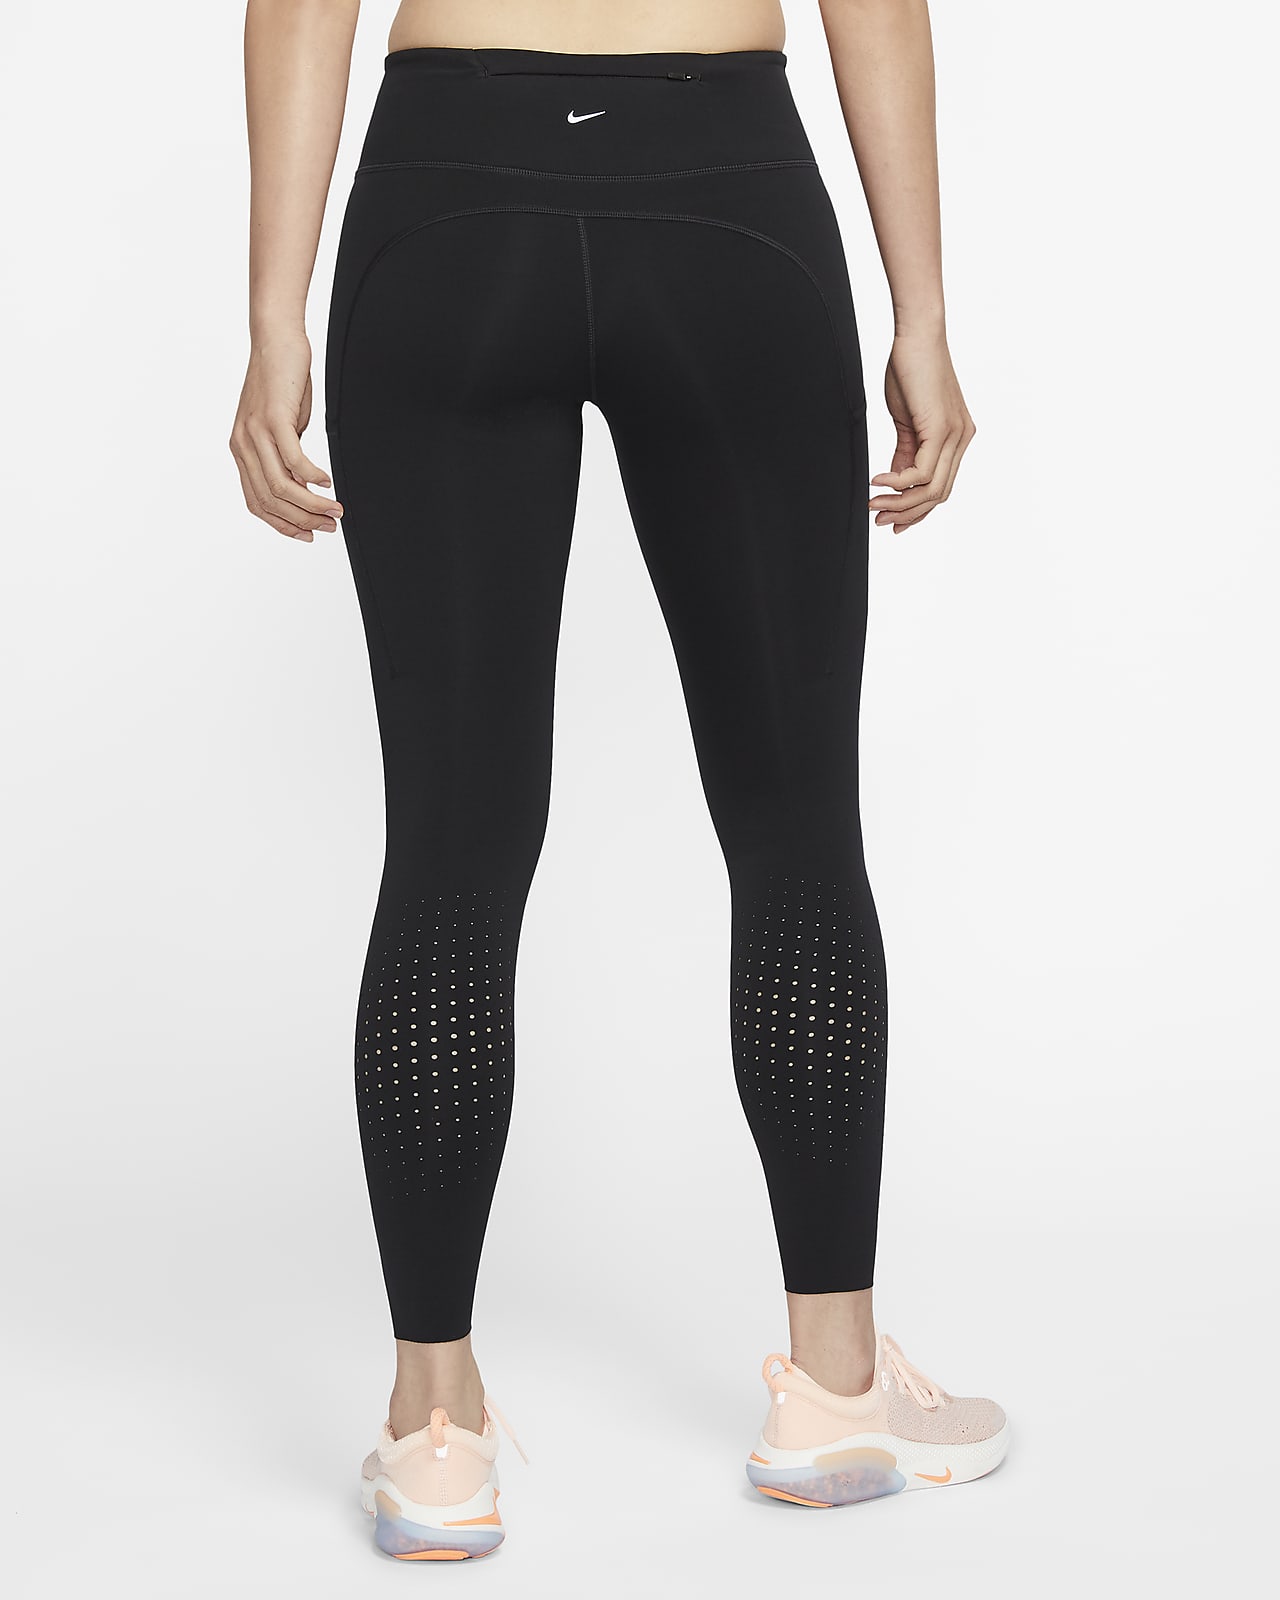 Nike Pro Training Femme leggings with pocket in black | ASOS